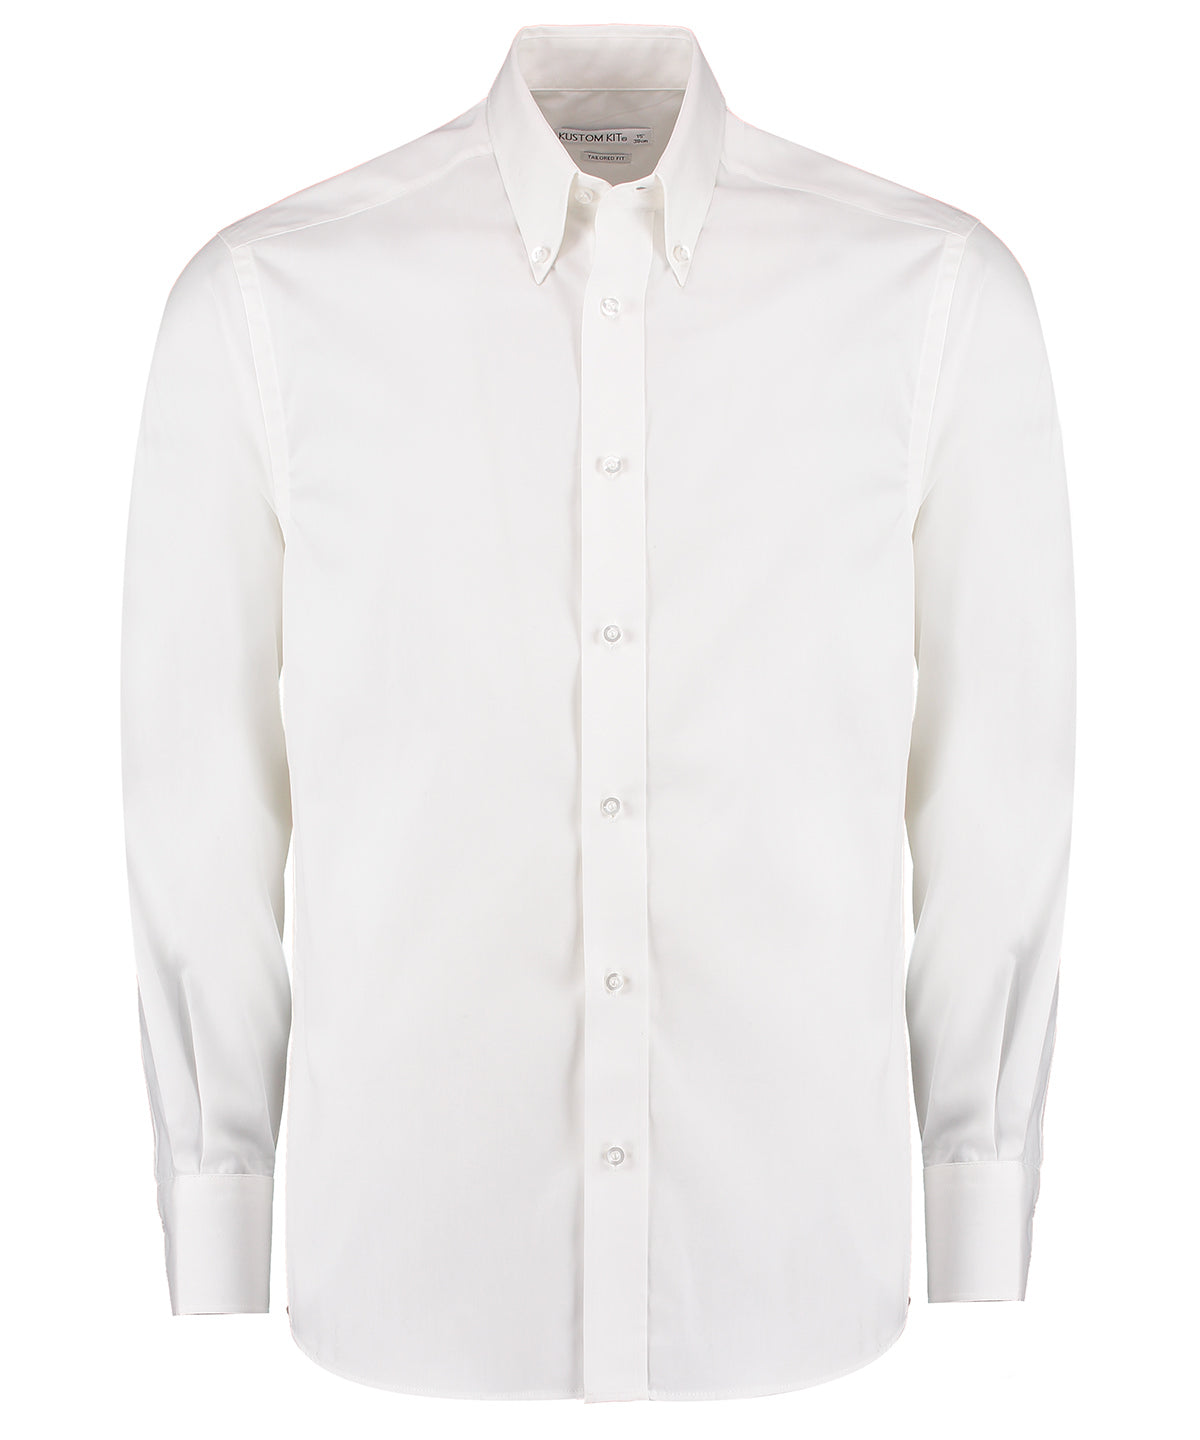 Bolir - Premium Oxford Shirt Long-sleeved (tailored Fit)